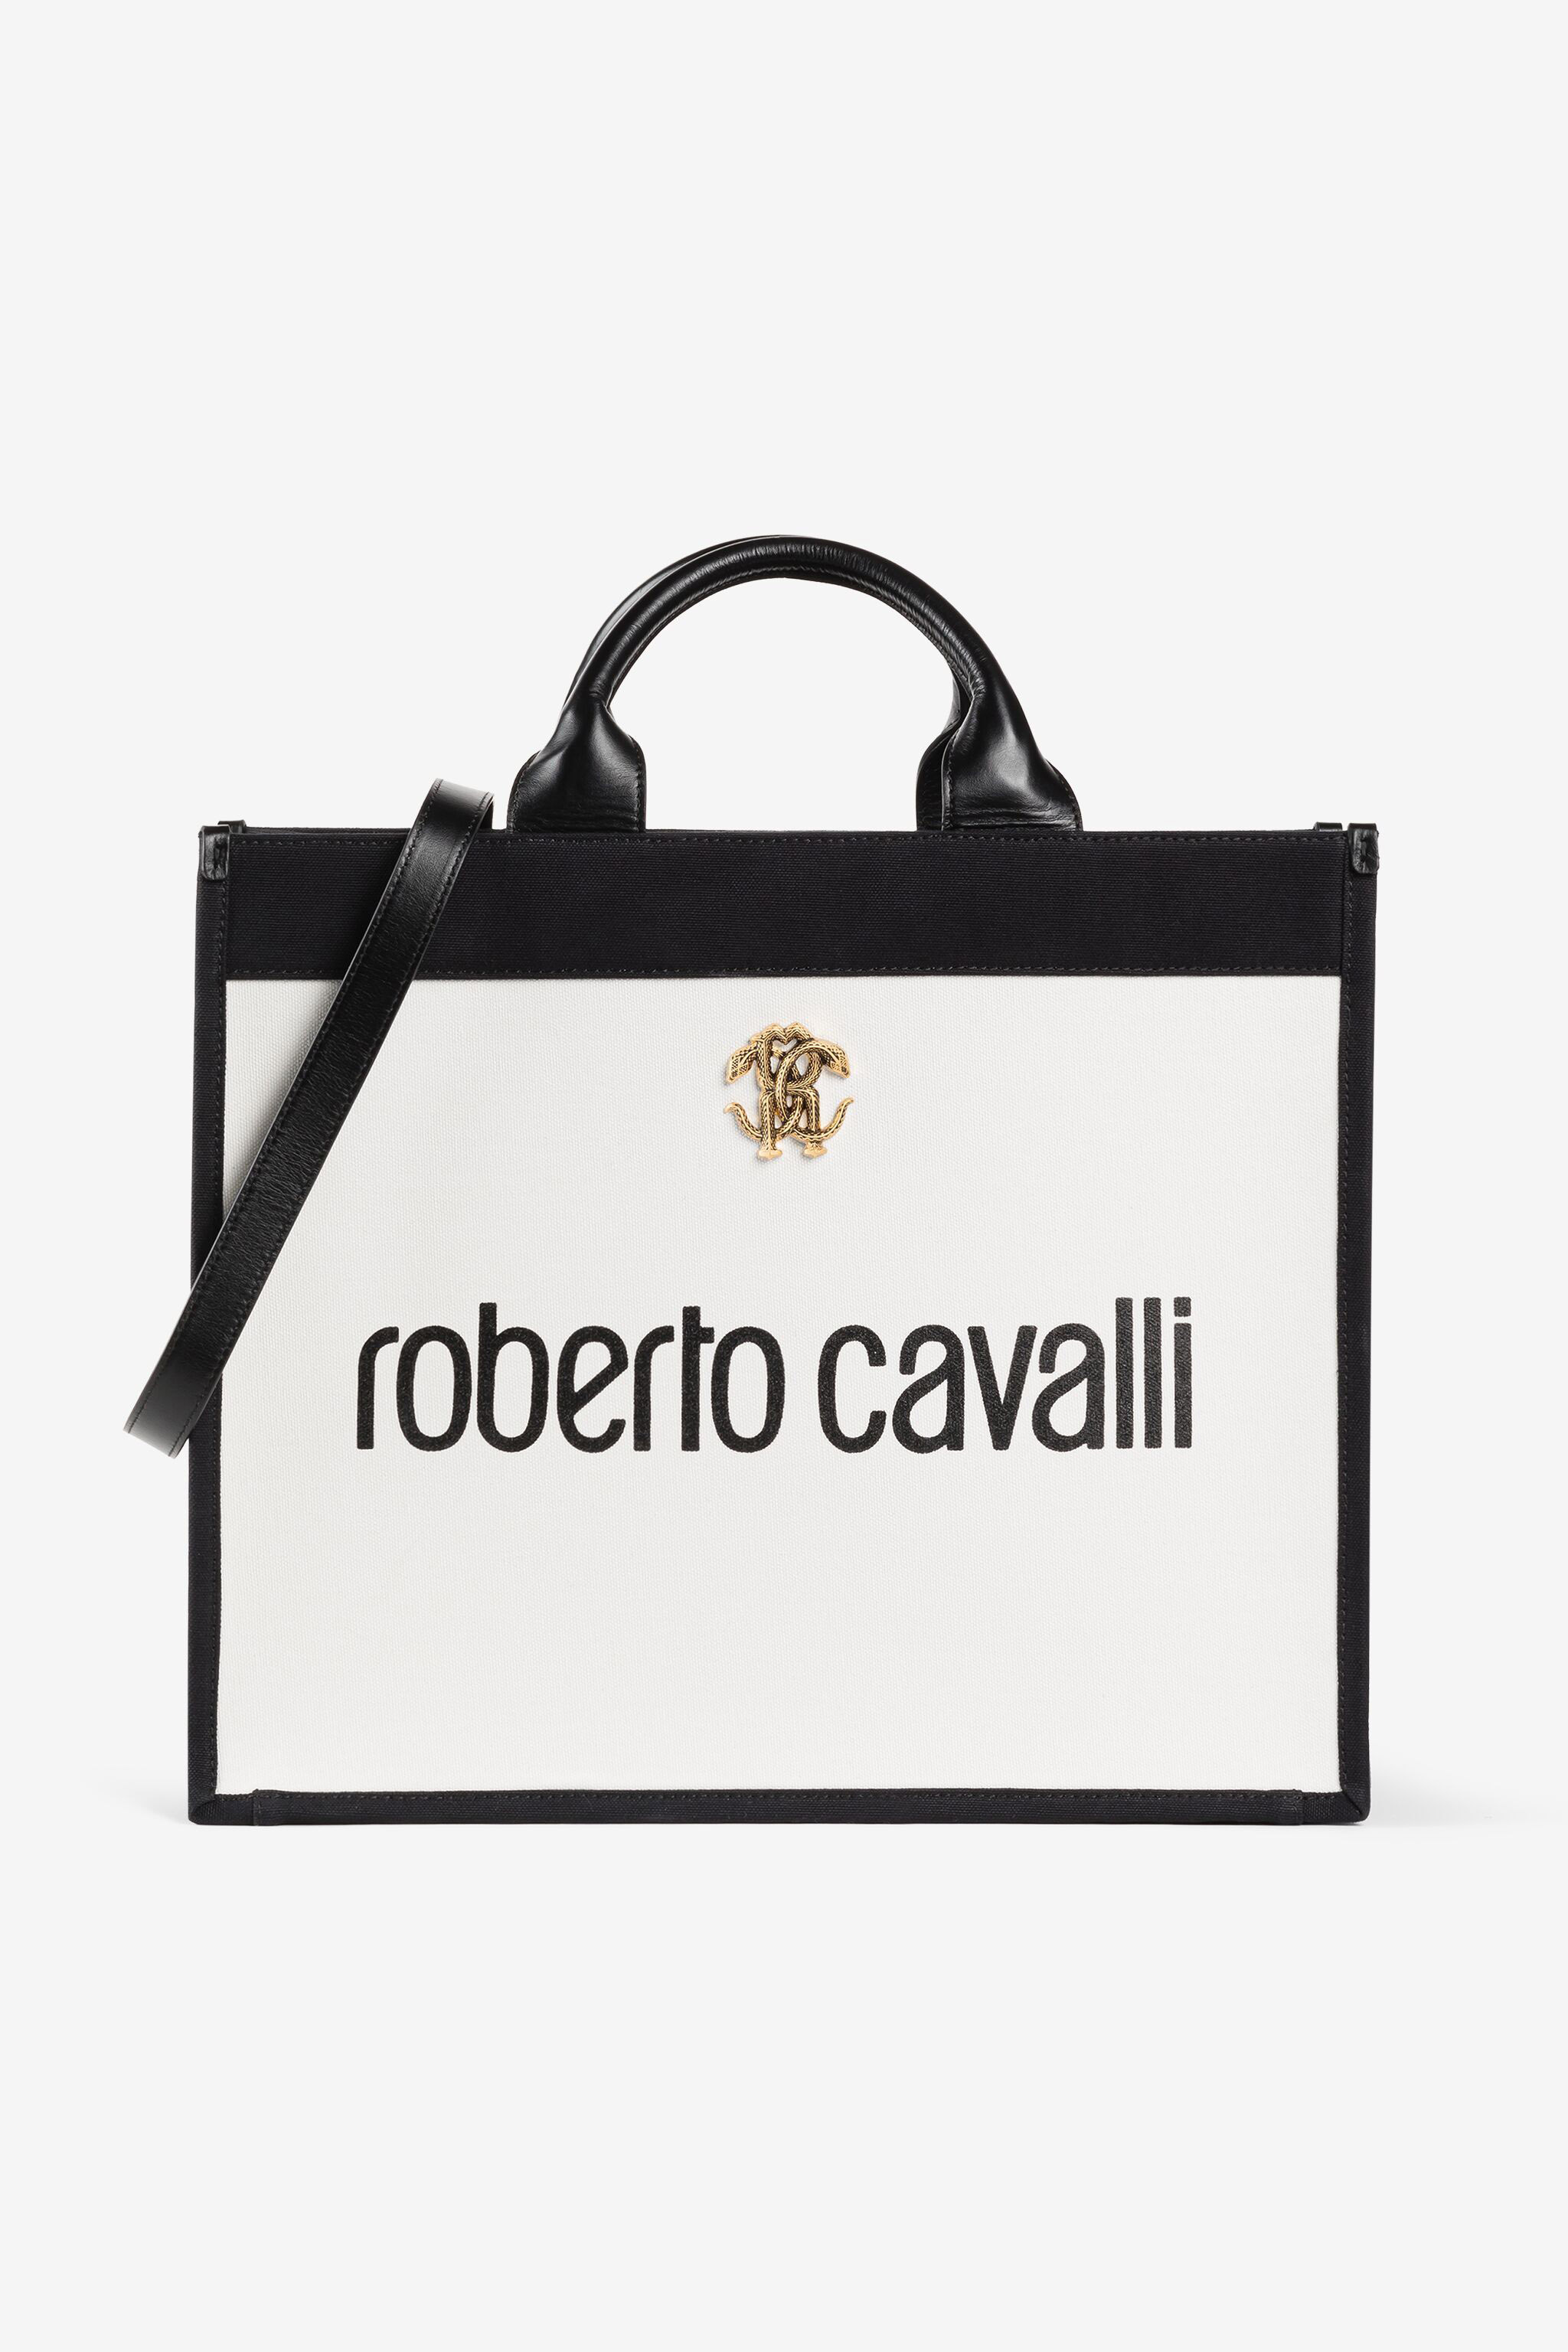 Roberto Cavalli Bags: That's More Like It